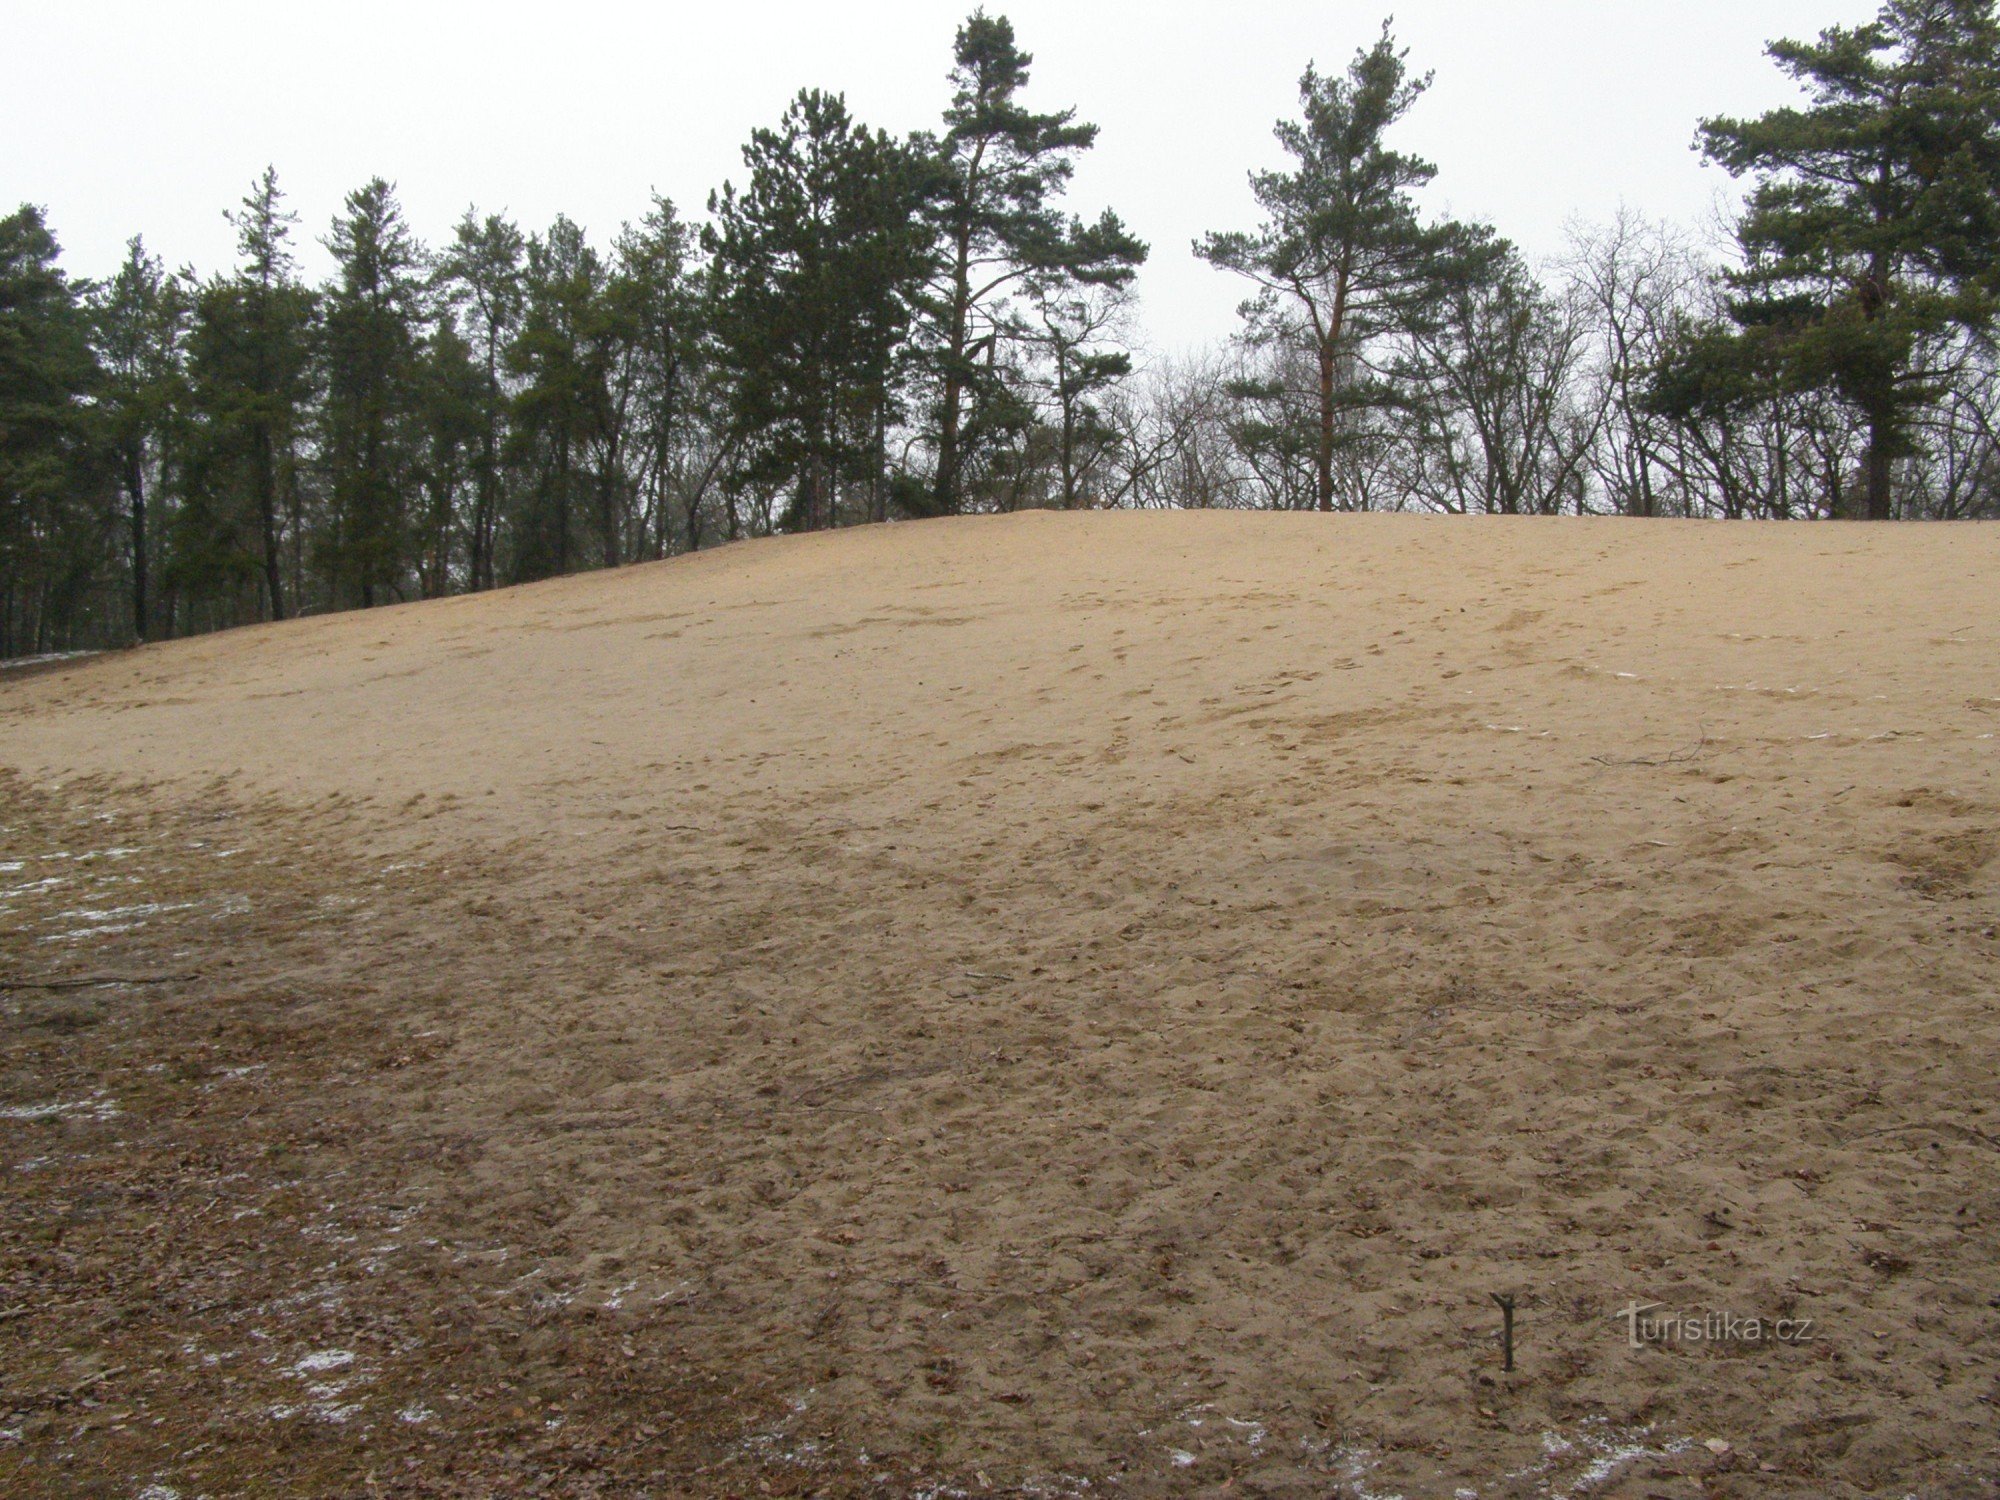 sand overflow - winter